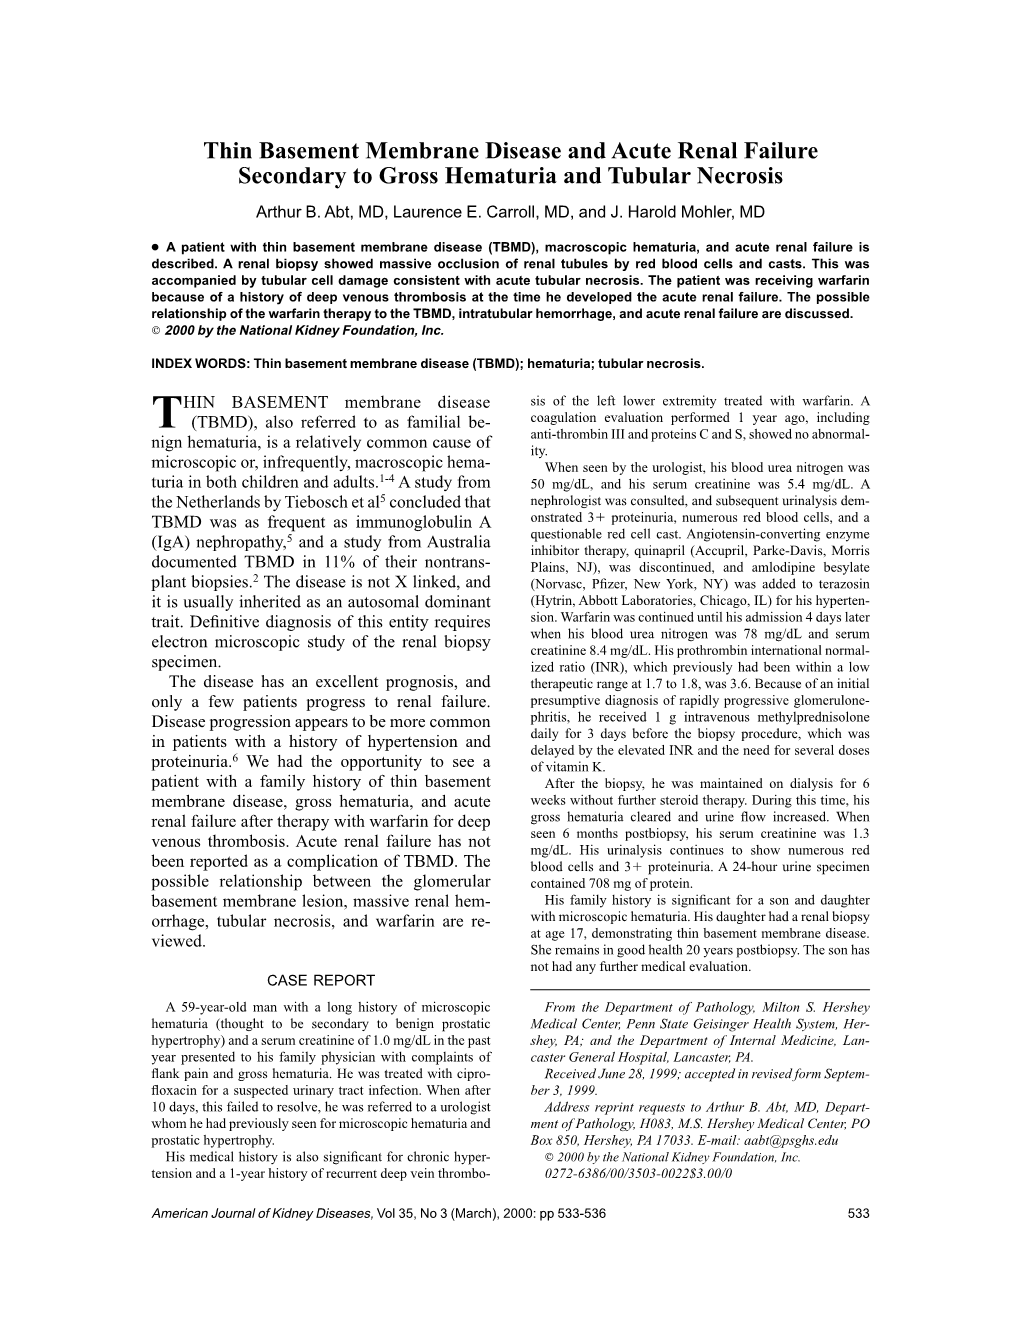 Thin Basement Membrane Disease and Acute Renal Failure Secondary to Gross Hematuria and Tubular Necrosis Arthur B